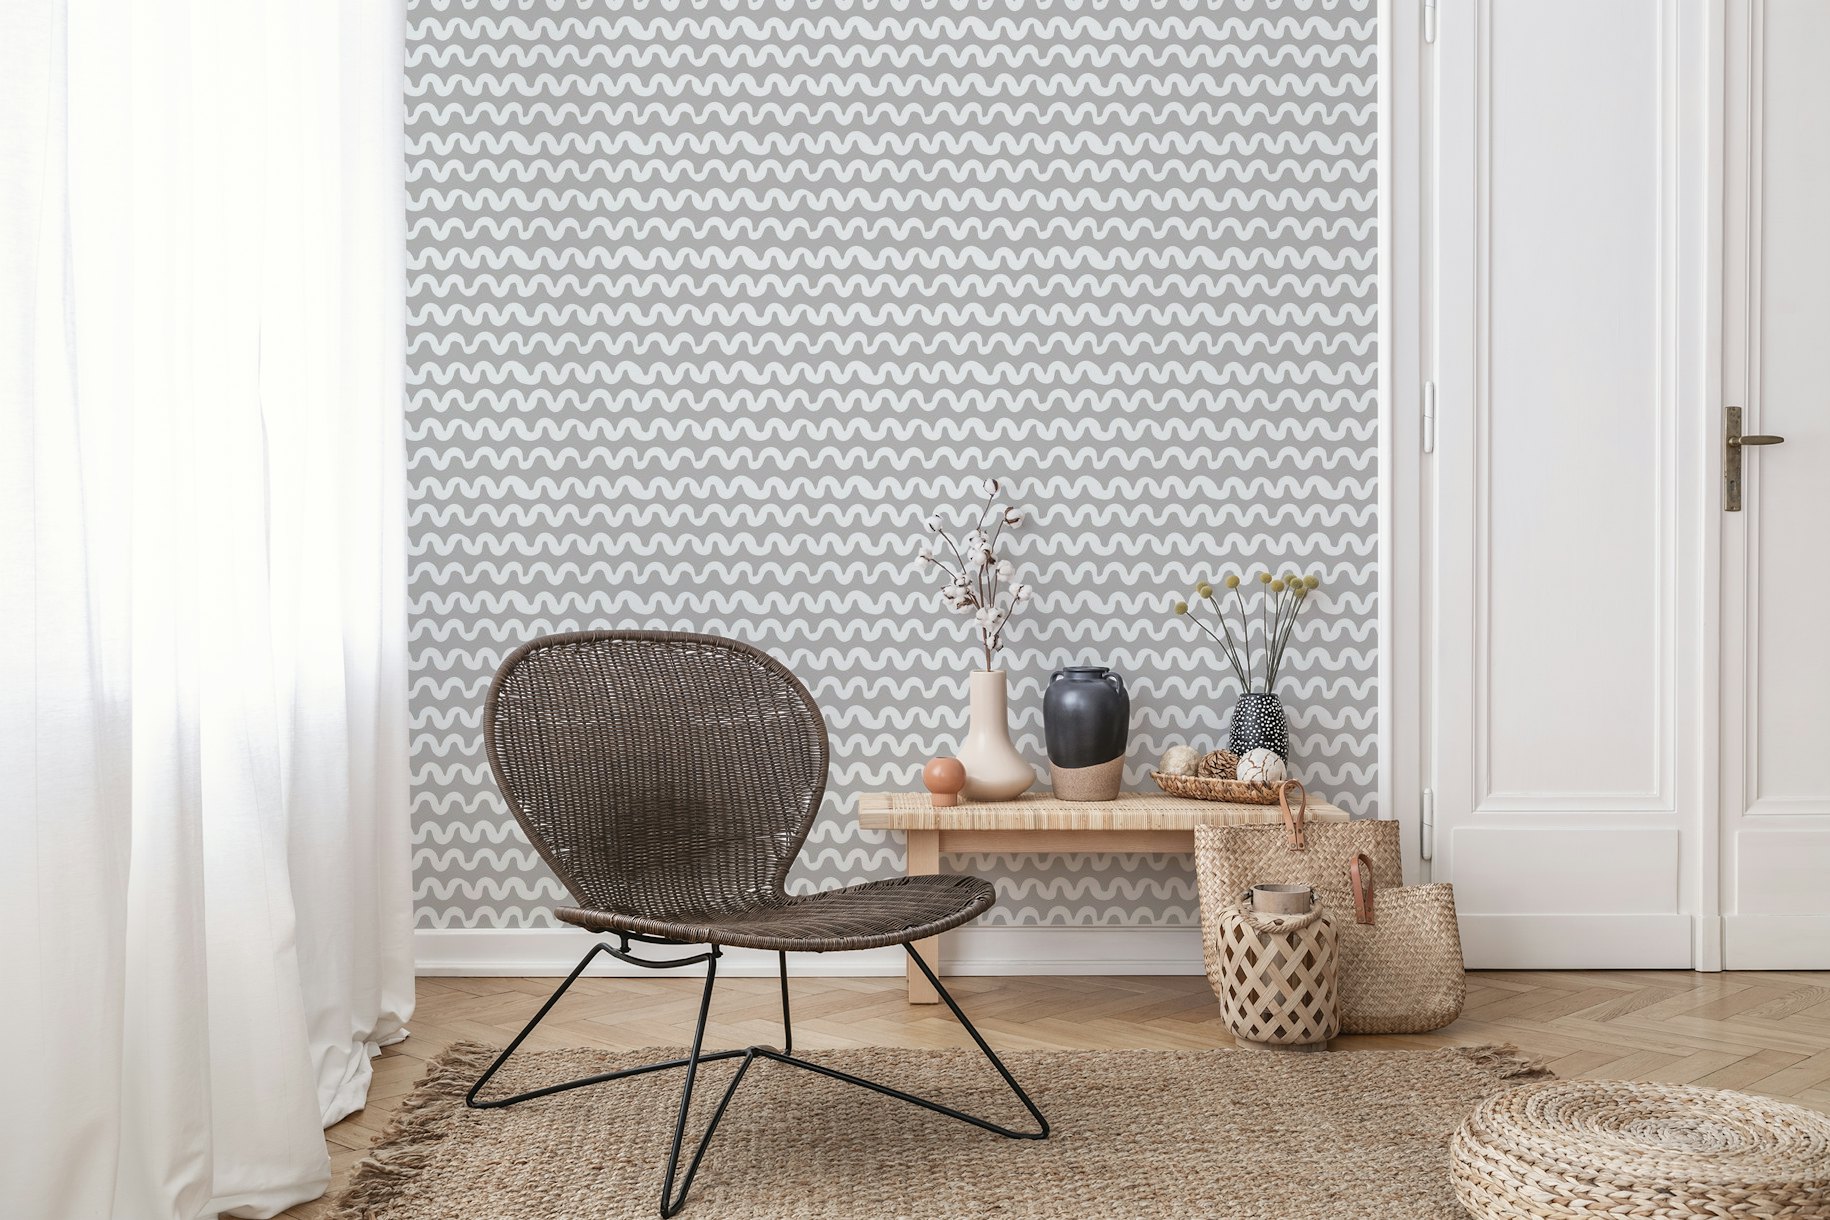 Grey waves wallpaper